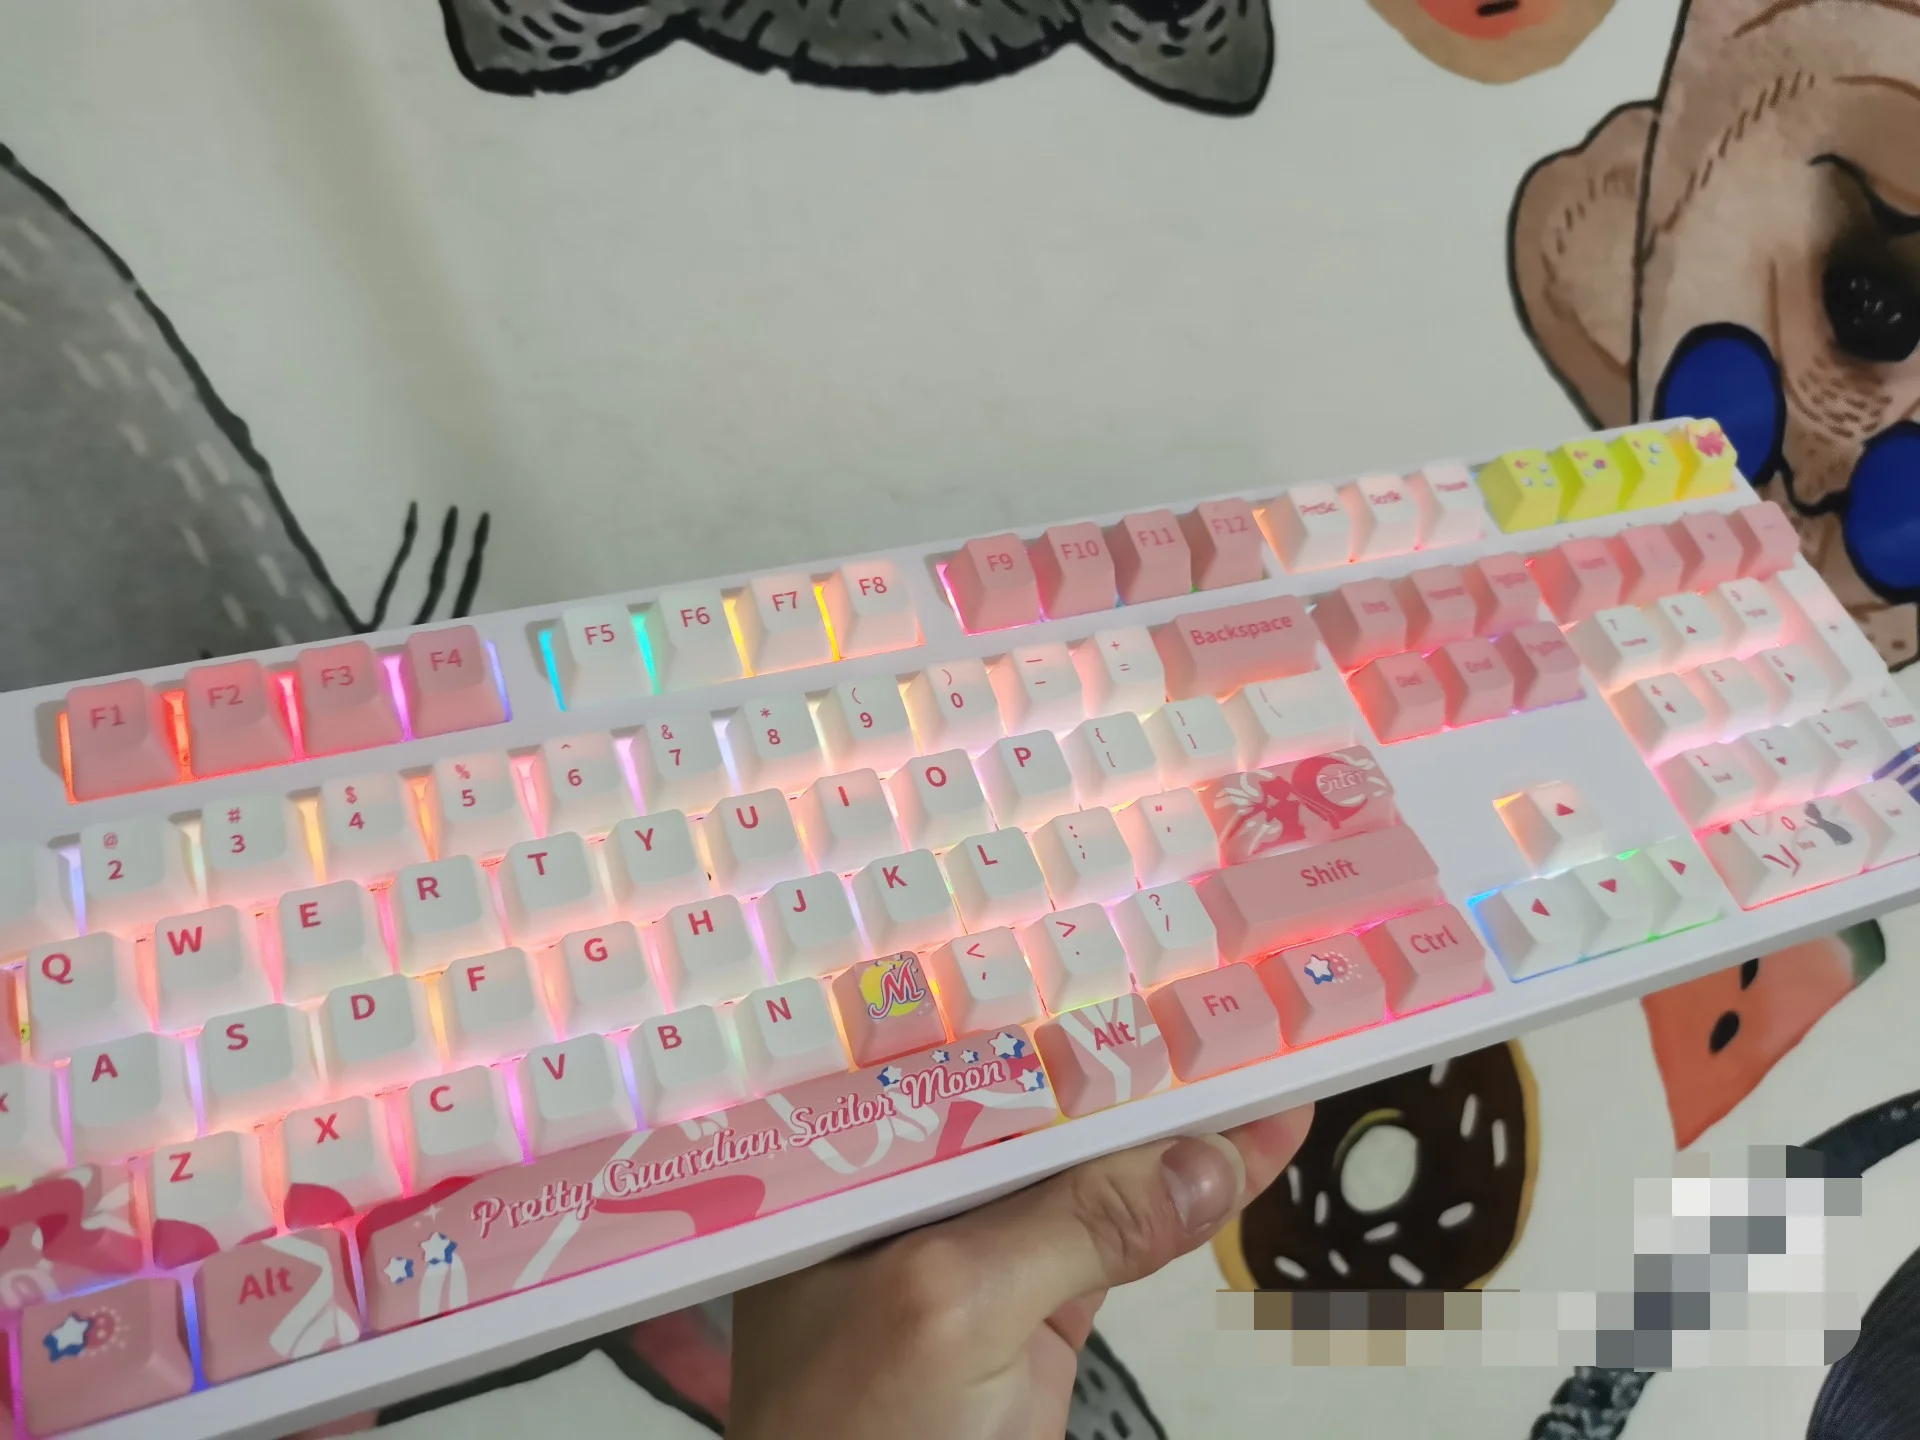 

Anime Keycap Kawaii Keycaps Cute Pink Keycaps 114 Keys PBT Keyboard Gift Sublimation Chreey Mechanical Keyboard Keycaps